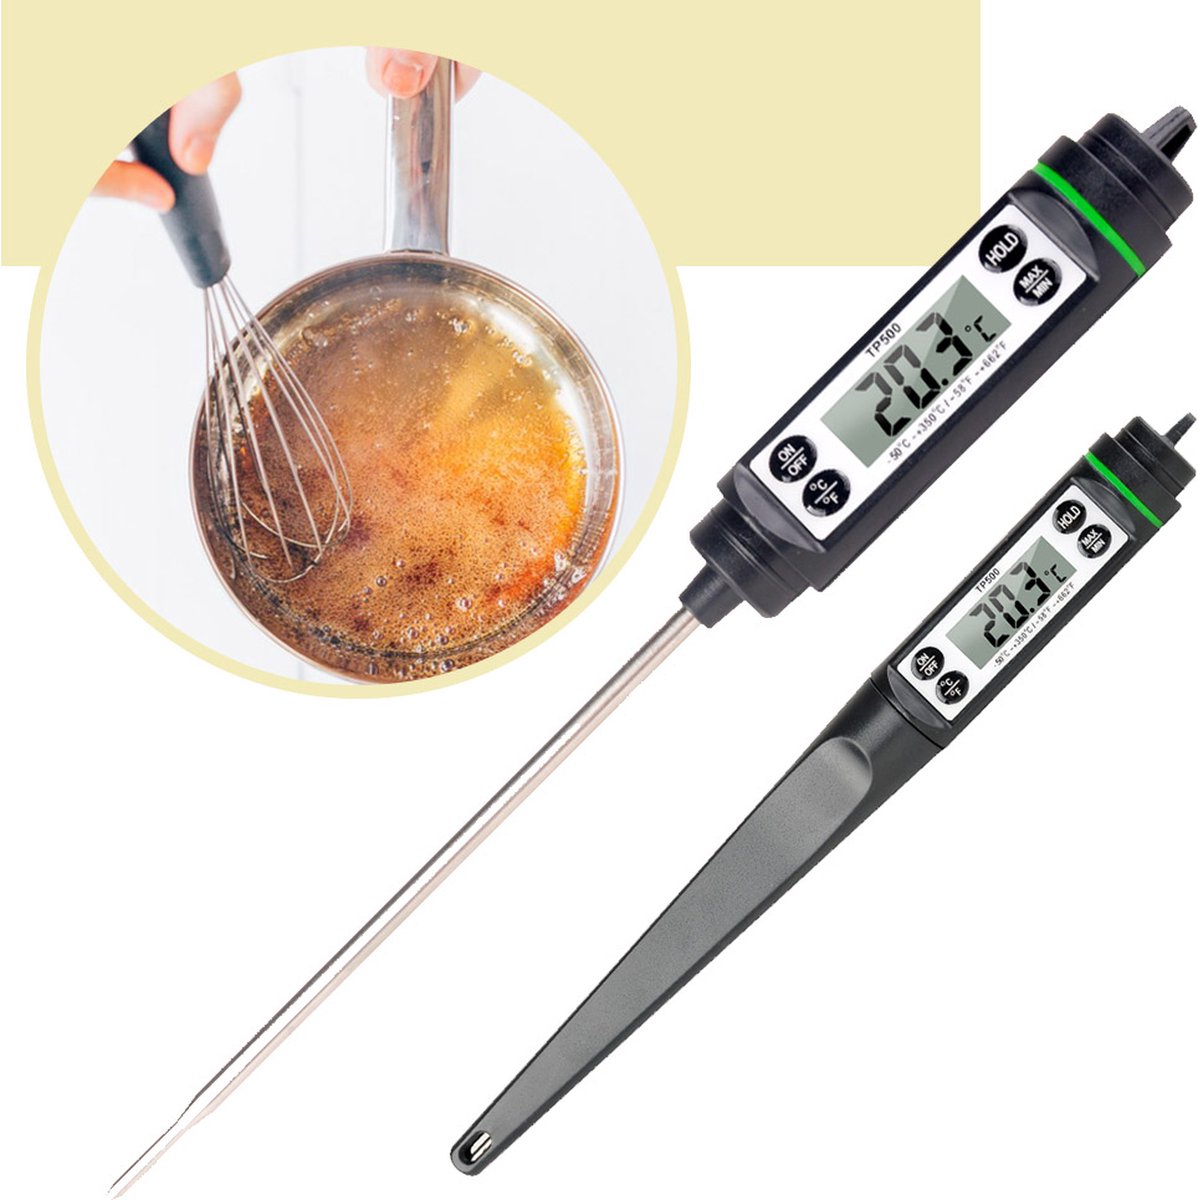 Lynnz® digitale suikerthermometer - ook voor vlees in bbq of oven - kernthermometer - vleesthermometer - oven - thermometer koken - bbq accesoires - draadloos - Lynnz